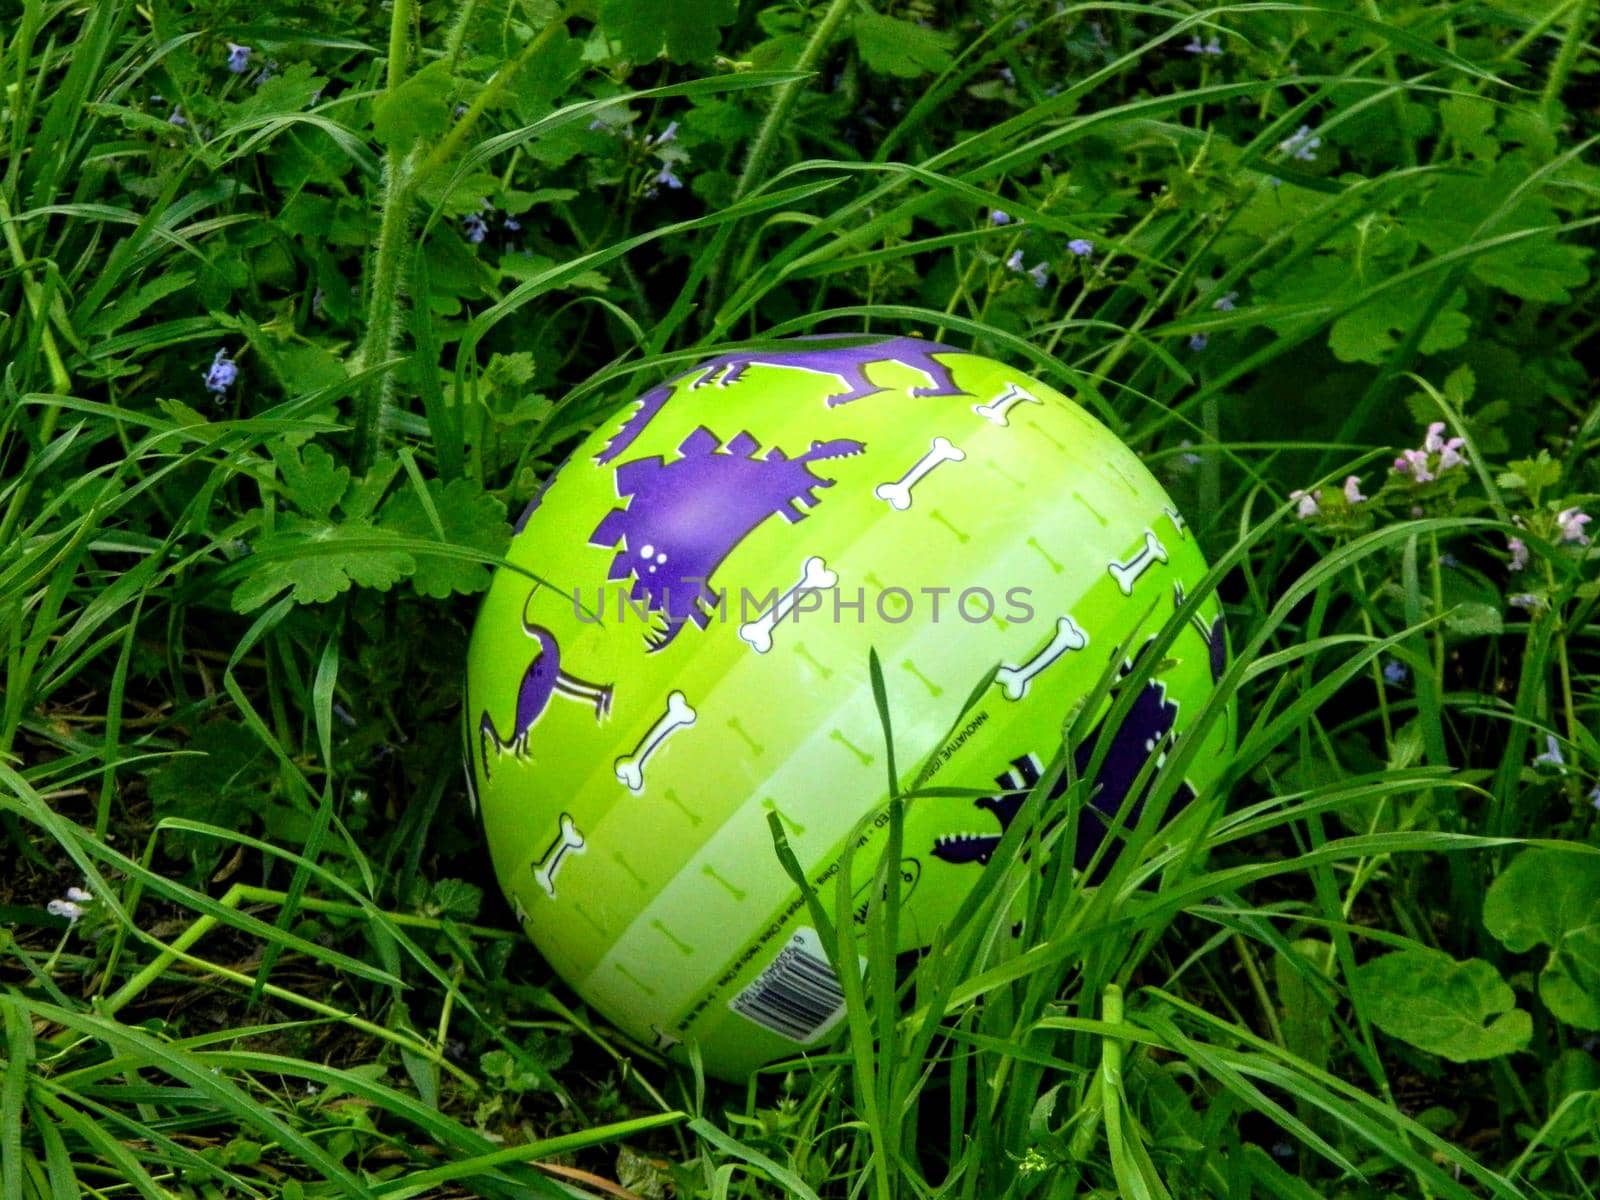 Ball whit dino on grass symbol of green eco environment by milastokerpro